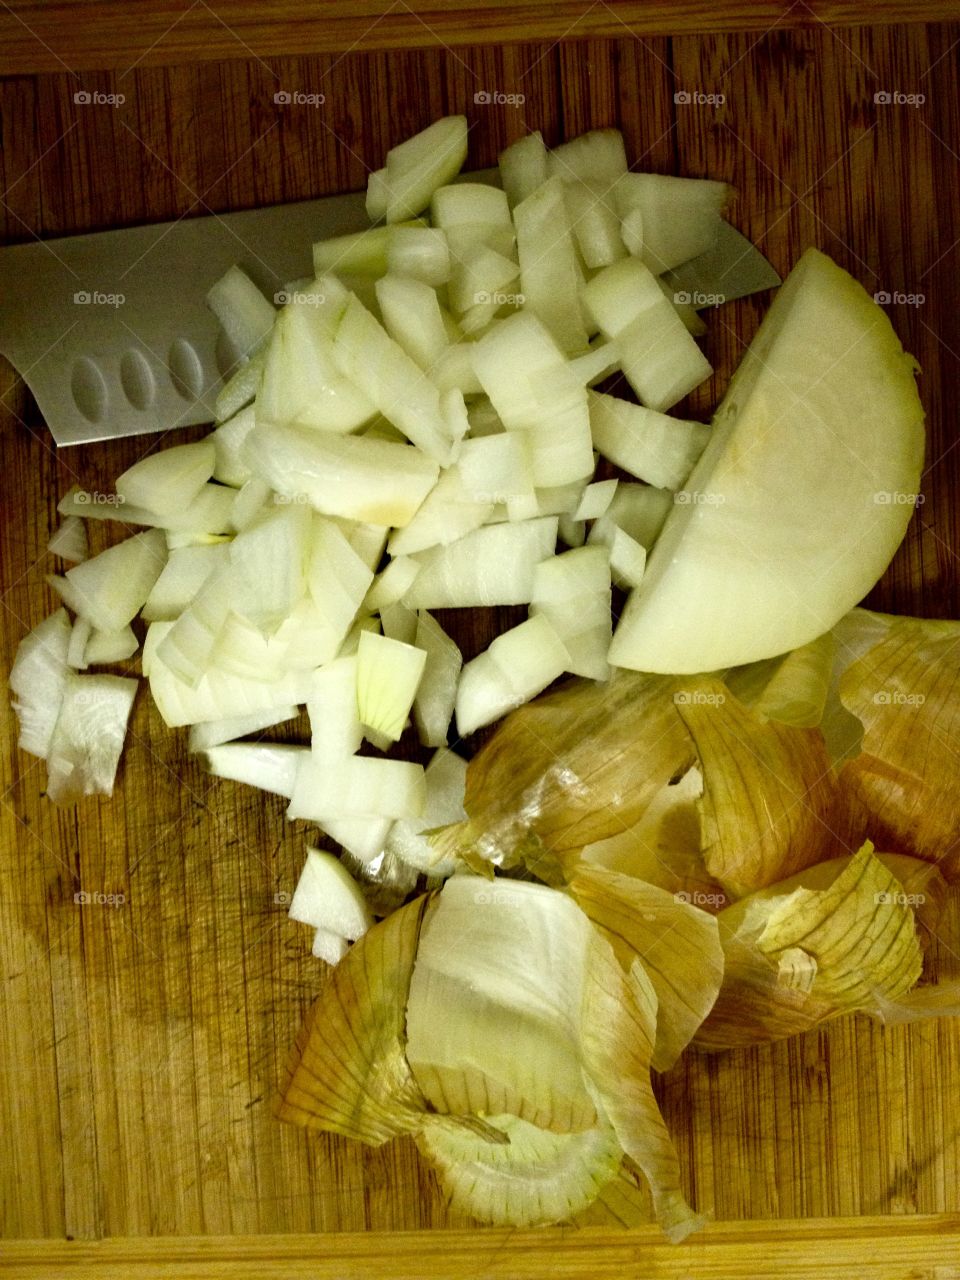 Chopped onions 1